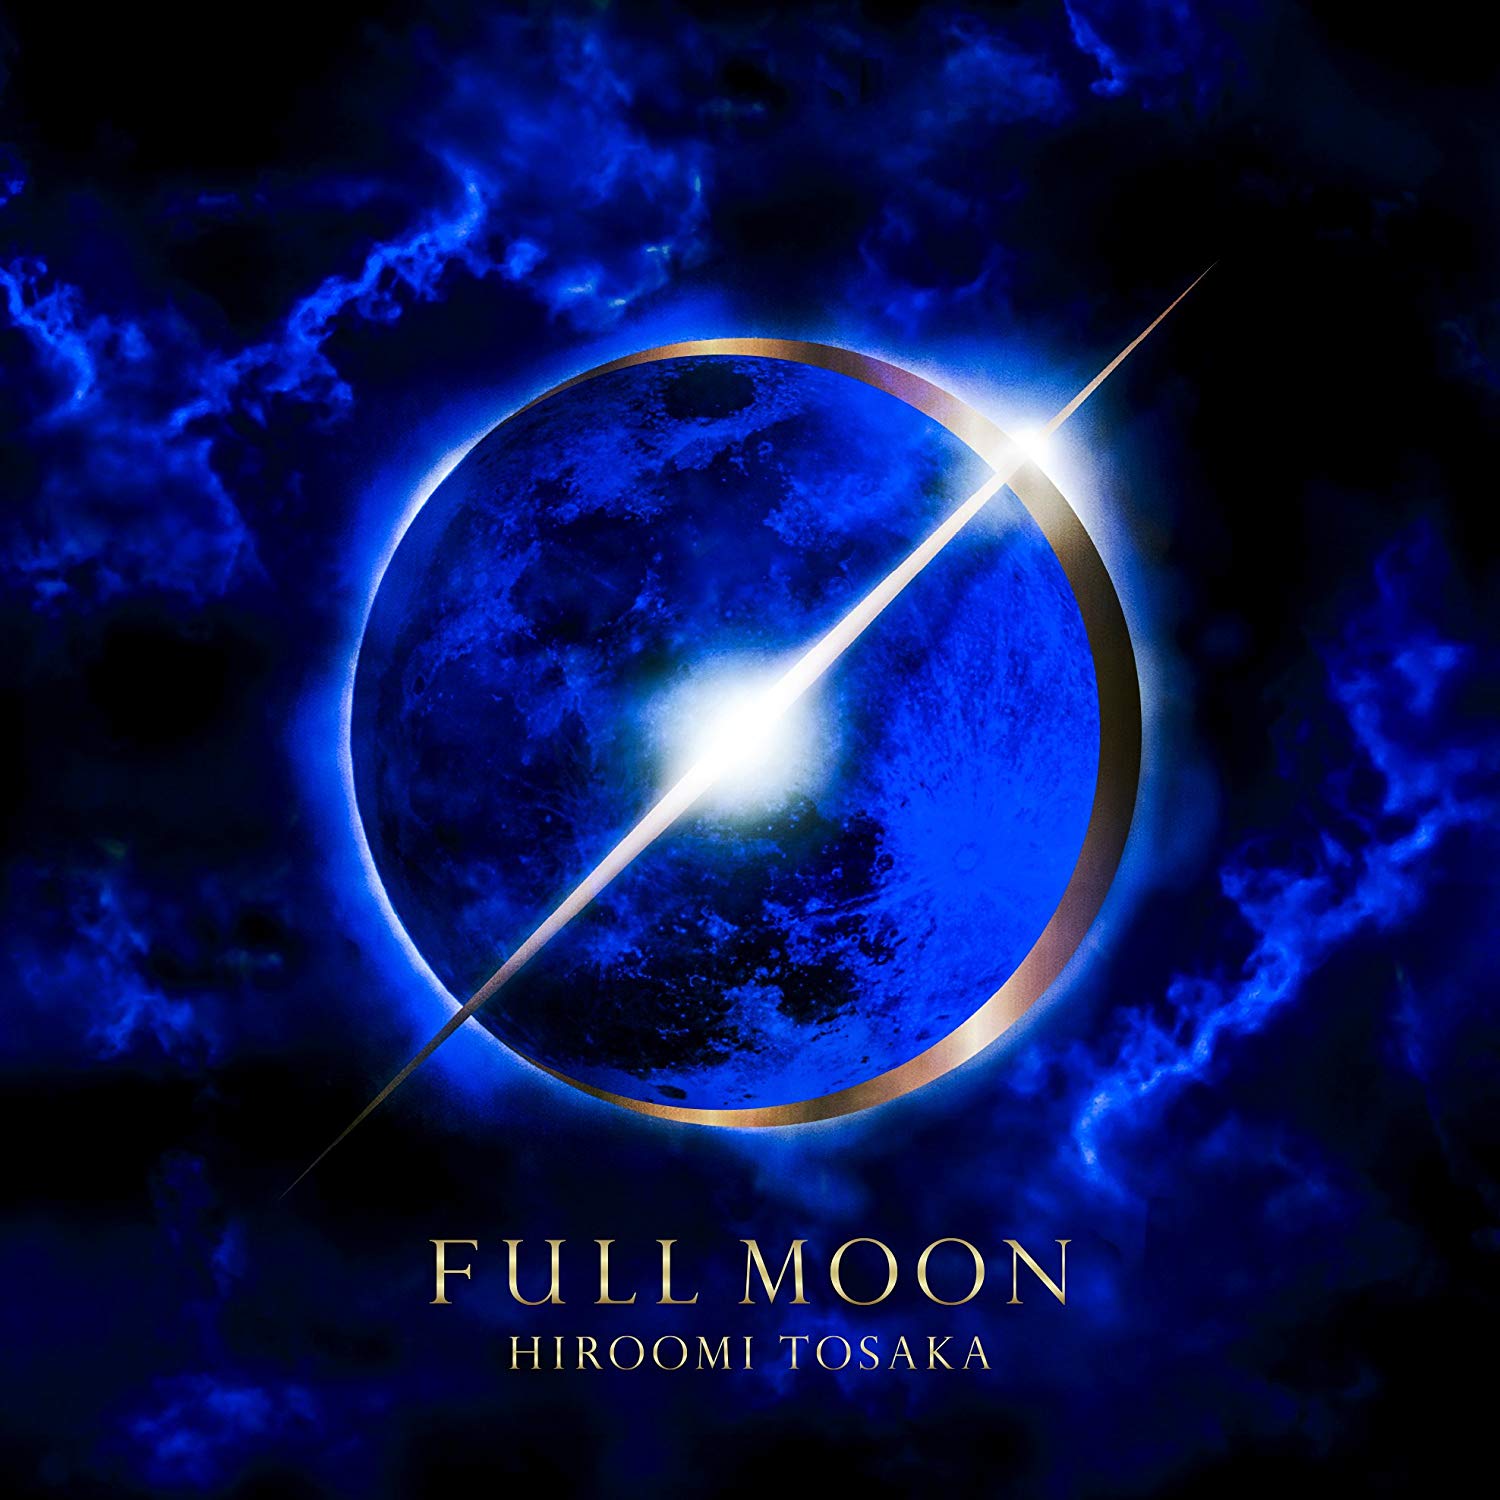 Hiroomi Tosaka 登坂広臣 Full Moon よりパーソナルなヴァイブスを感じるフル コンプリート作品 Mikiki